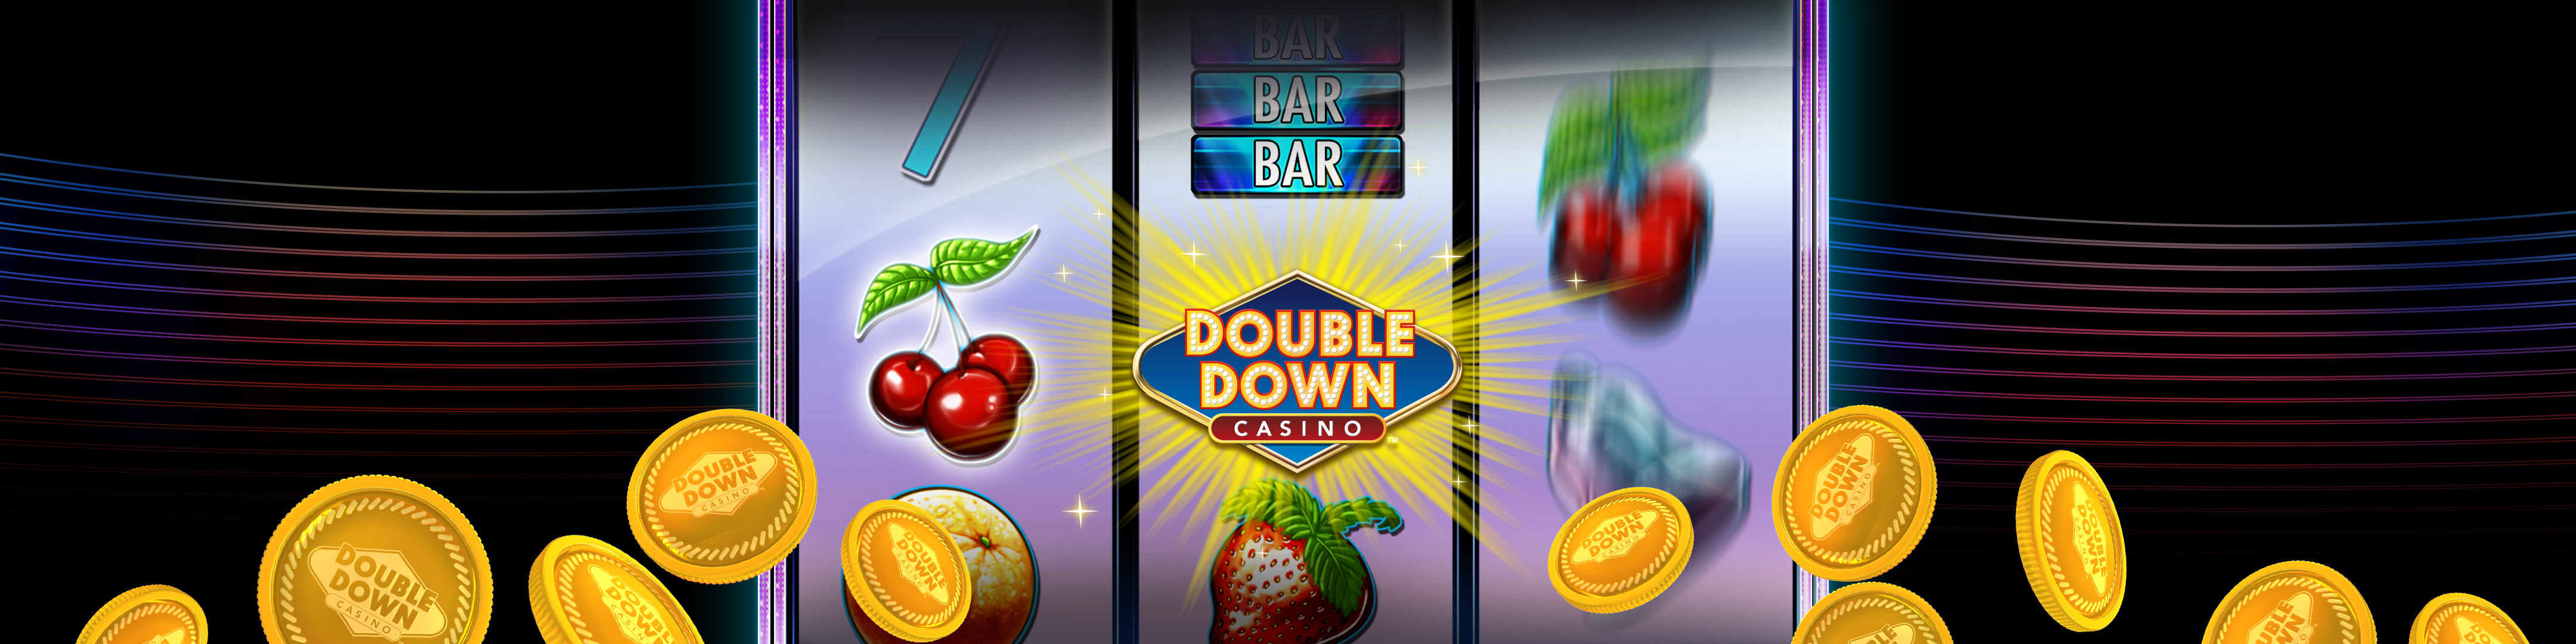 0 doubledown casino free slots